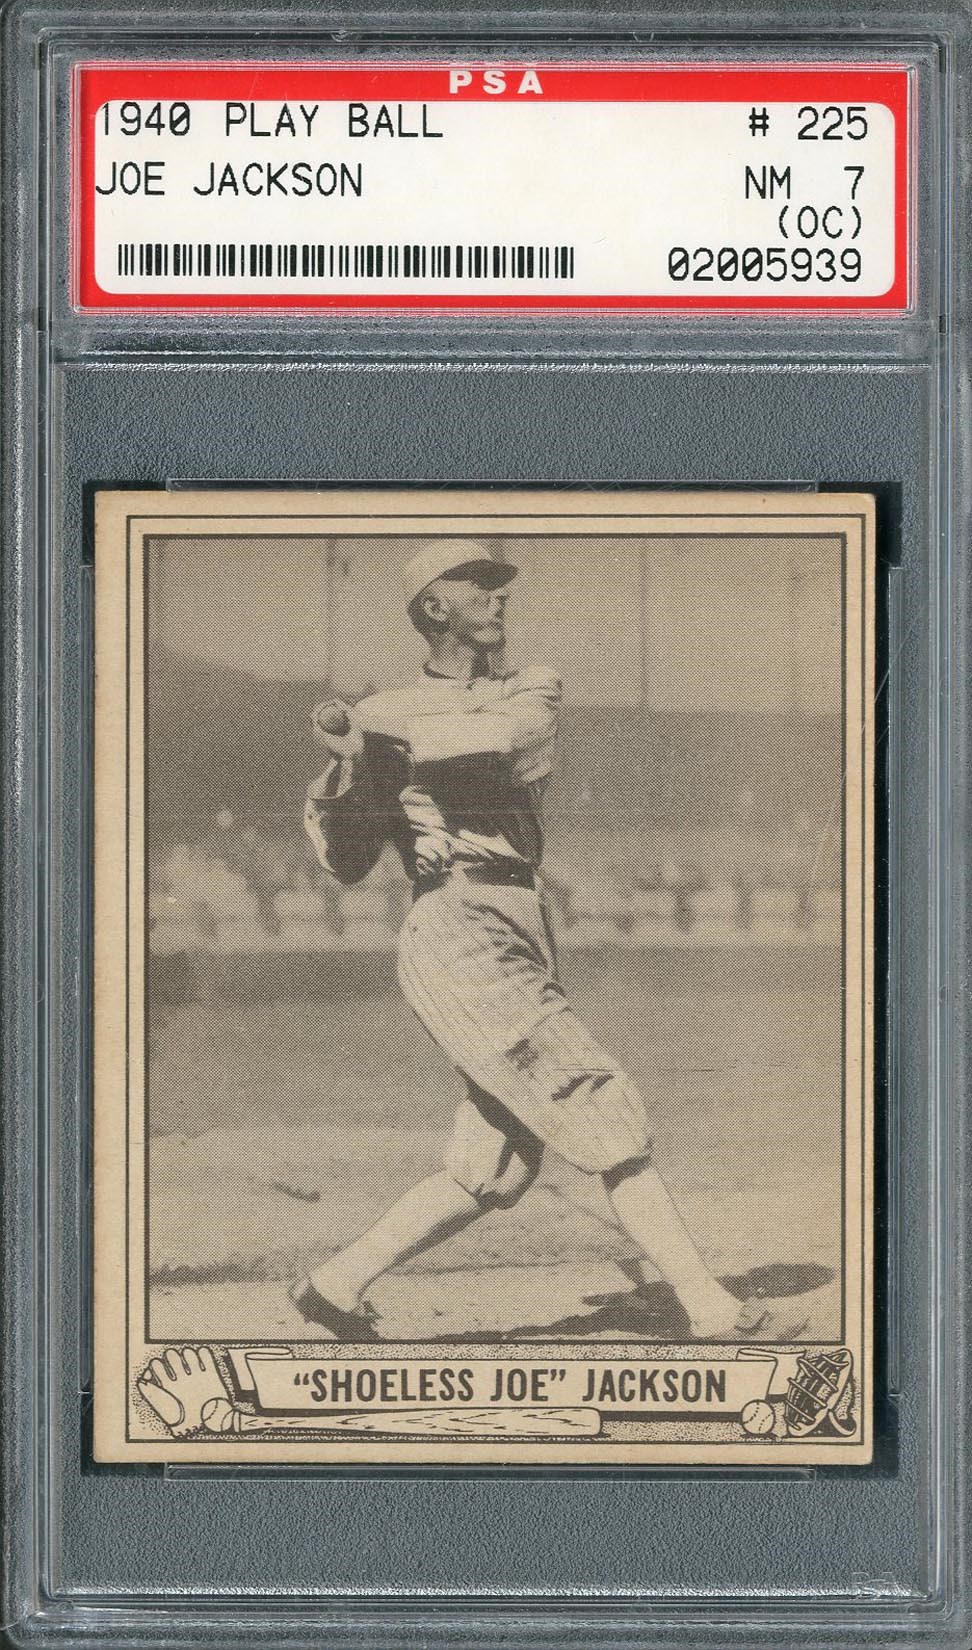 Baseball and Trading Cards - 1940 Play Ball Joe Jackson #225 PSA NM 7 (OC)